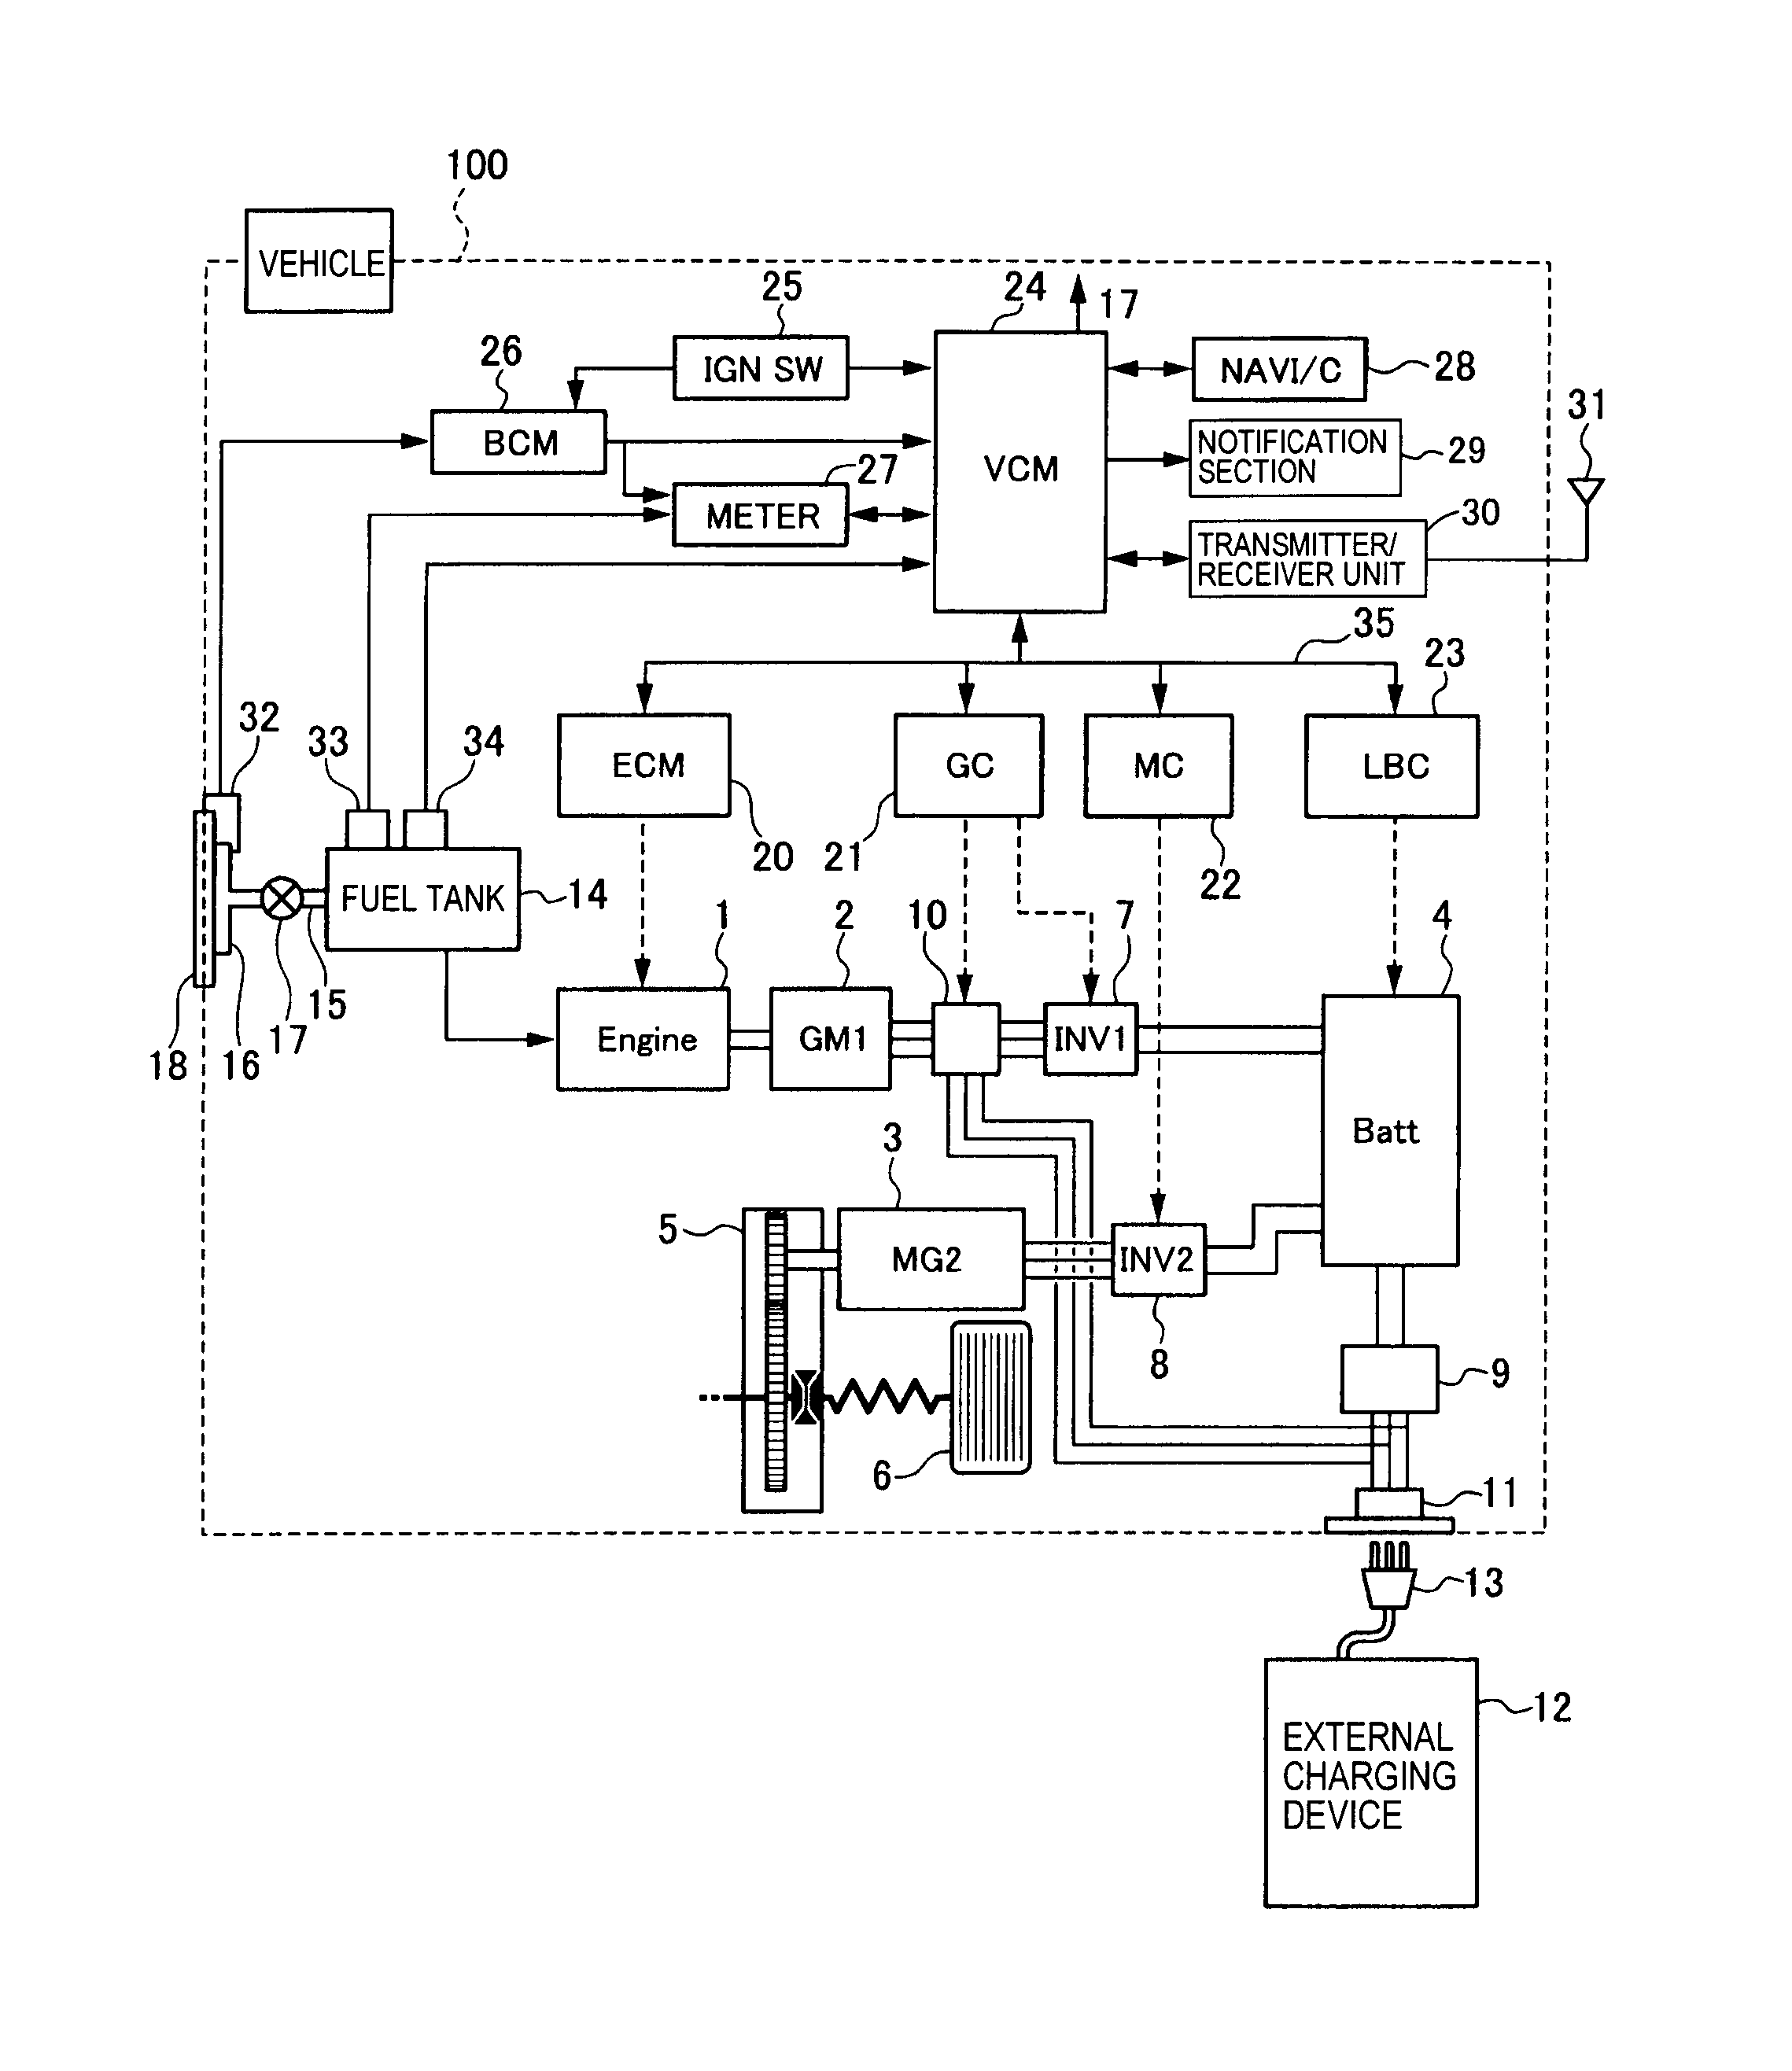 gec226-mvps-3w-l help wiring diagram